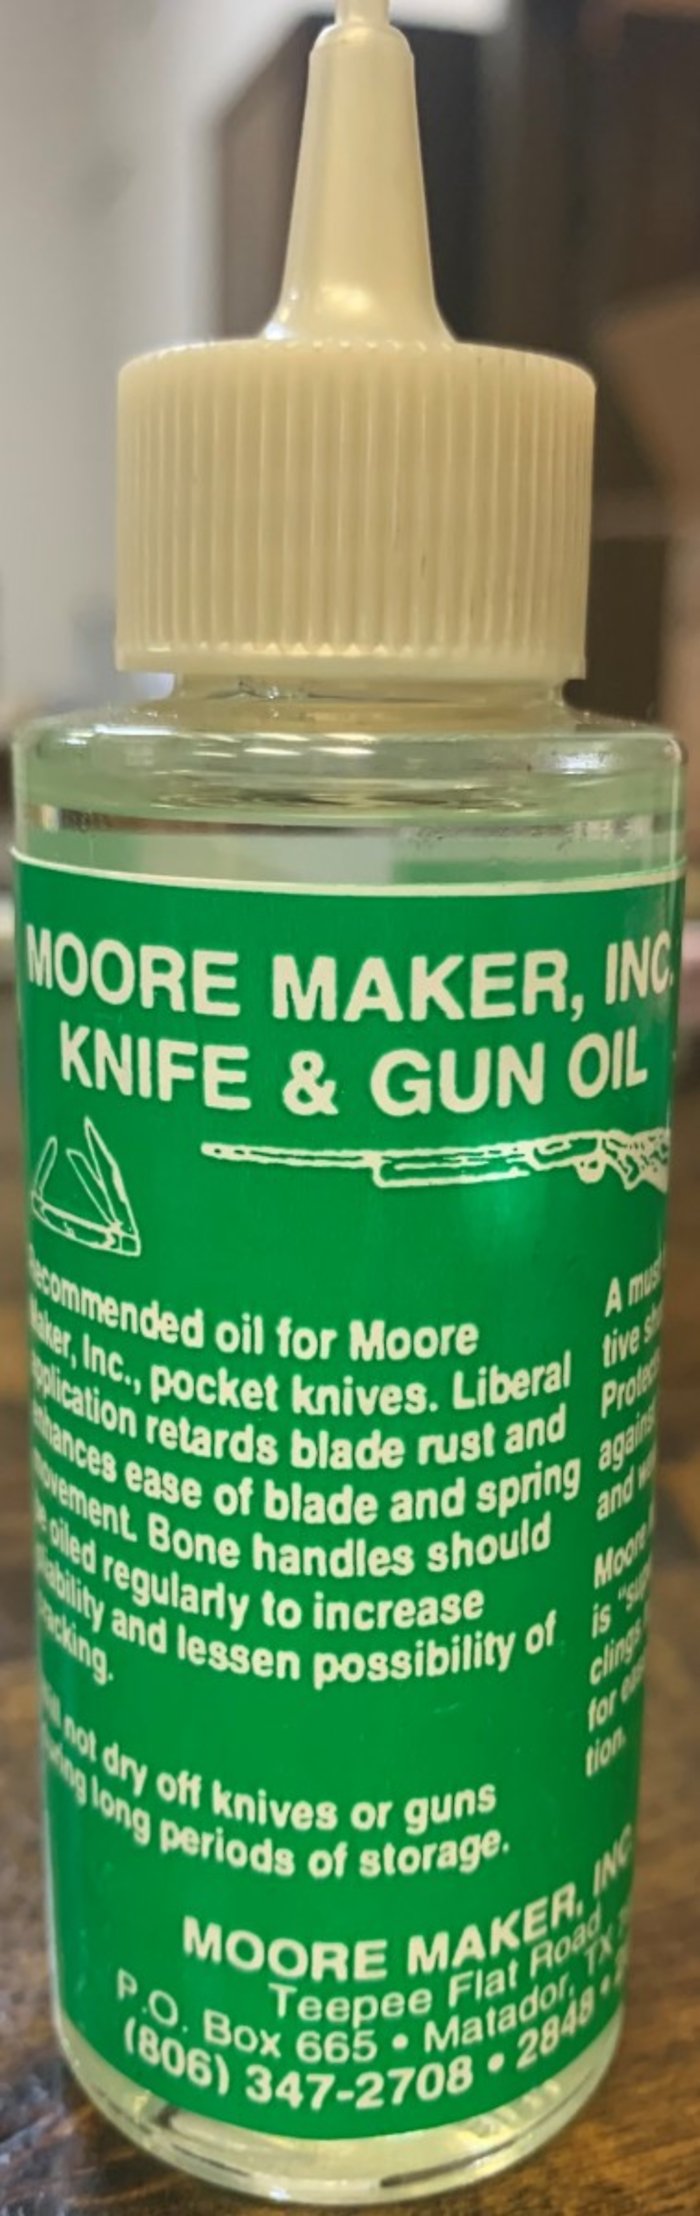 Knife and Gun Oil